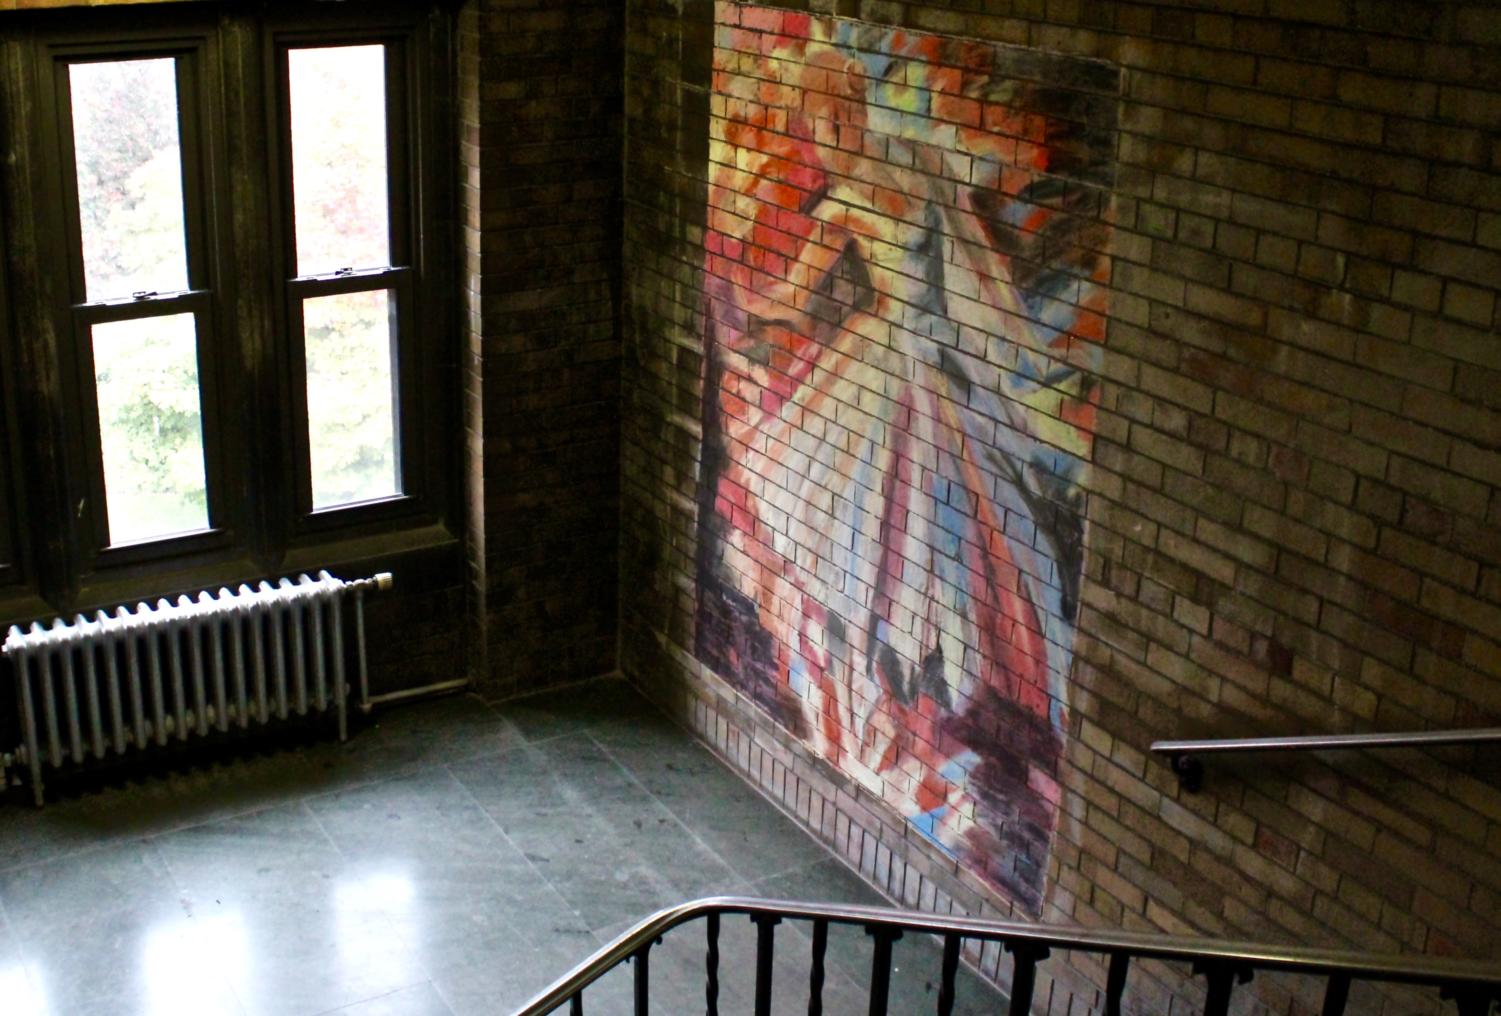 Dee Nitz created a ballerina inspired by Impressionist art for Linn- Matthews’s walls.